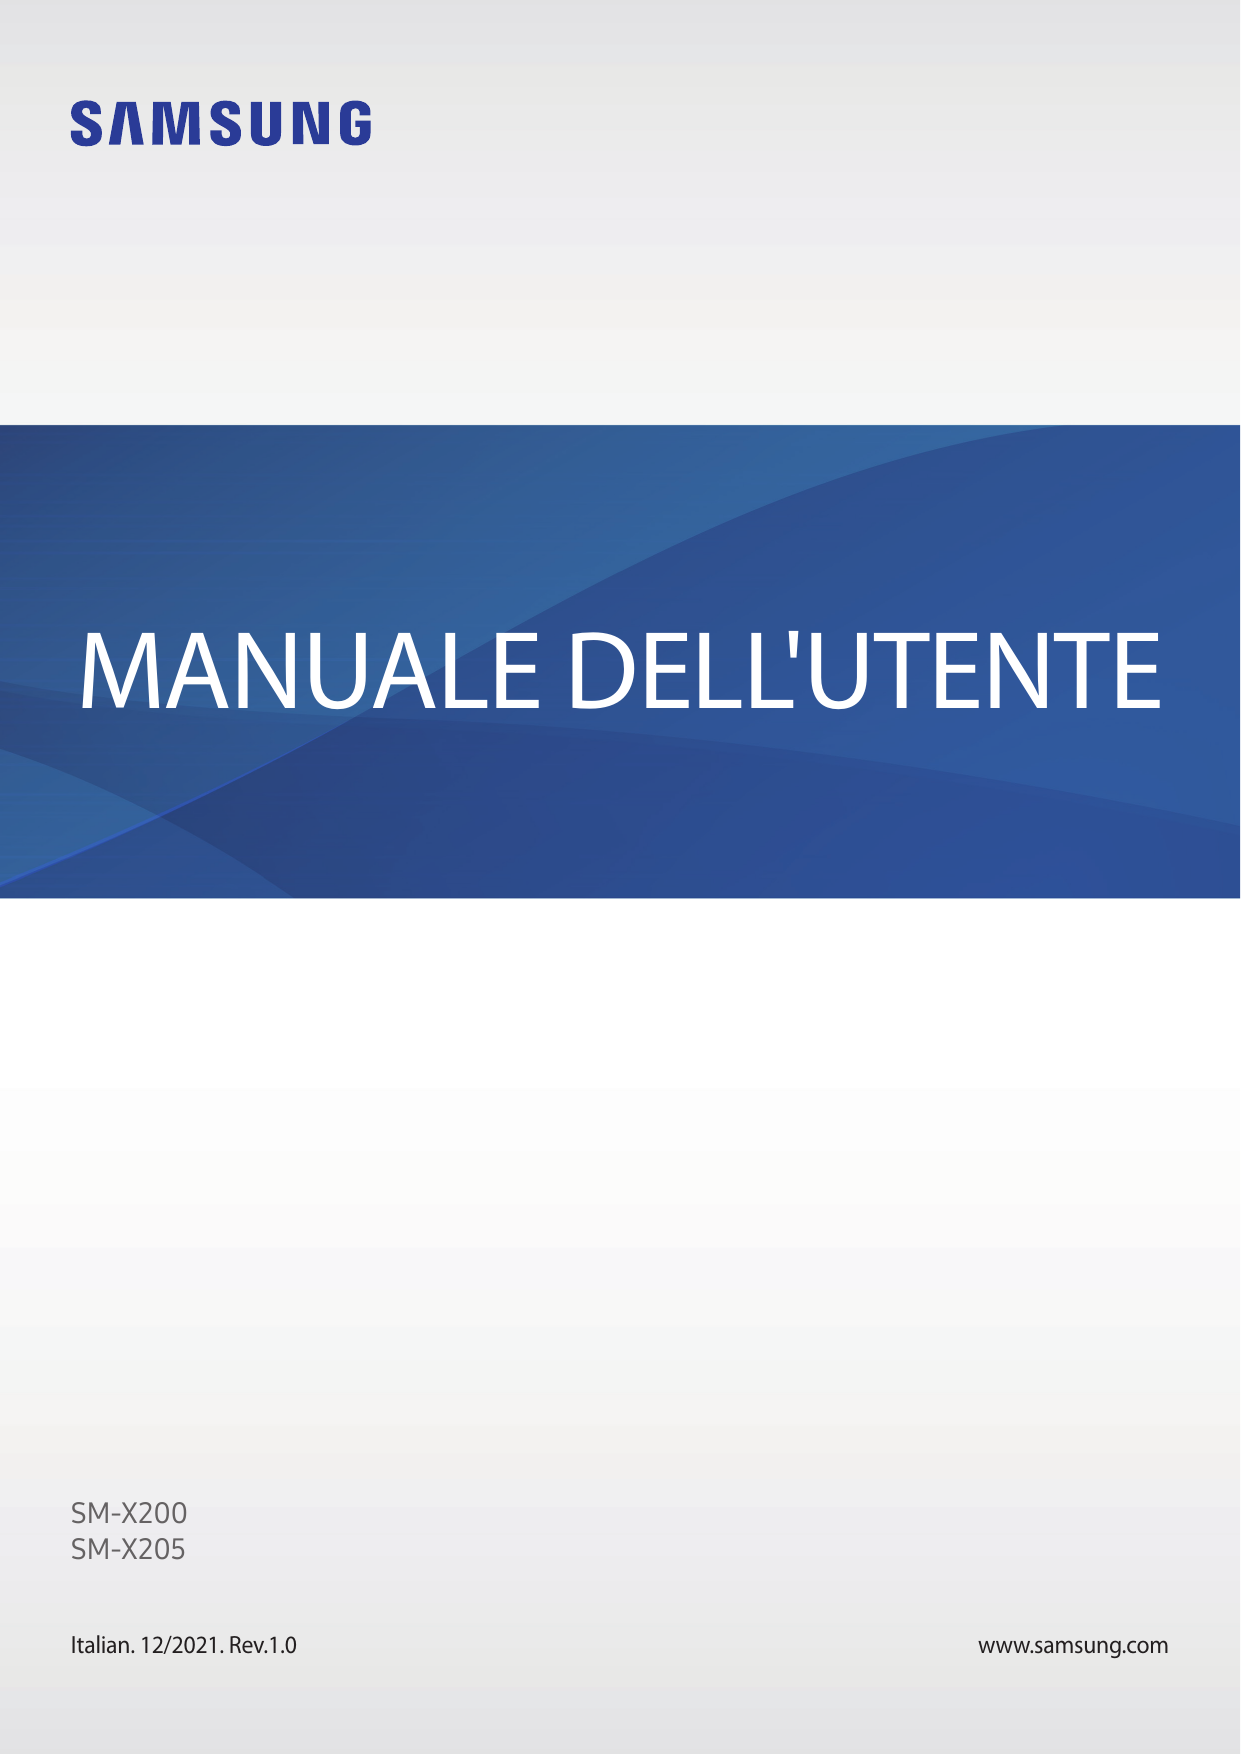 MANUALE DELL'UTENTESM-X200SM-X205Italian. 12/2021. Rev.1.0www.samsung.com